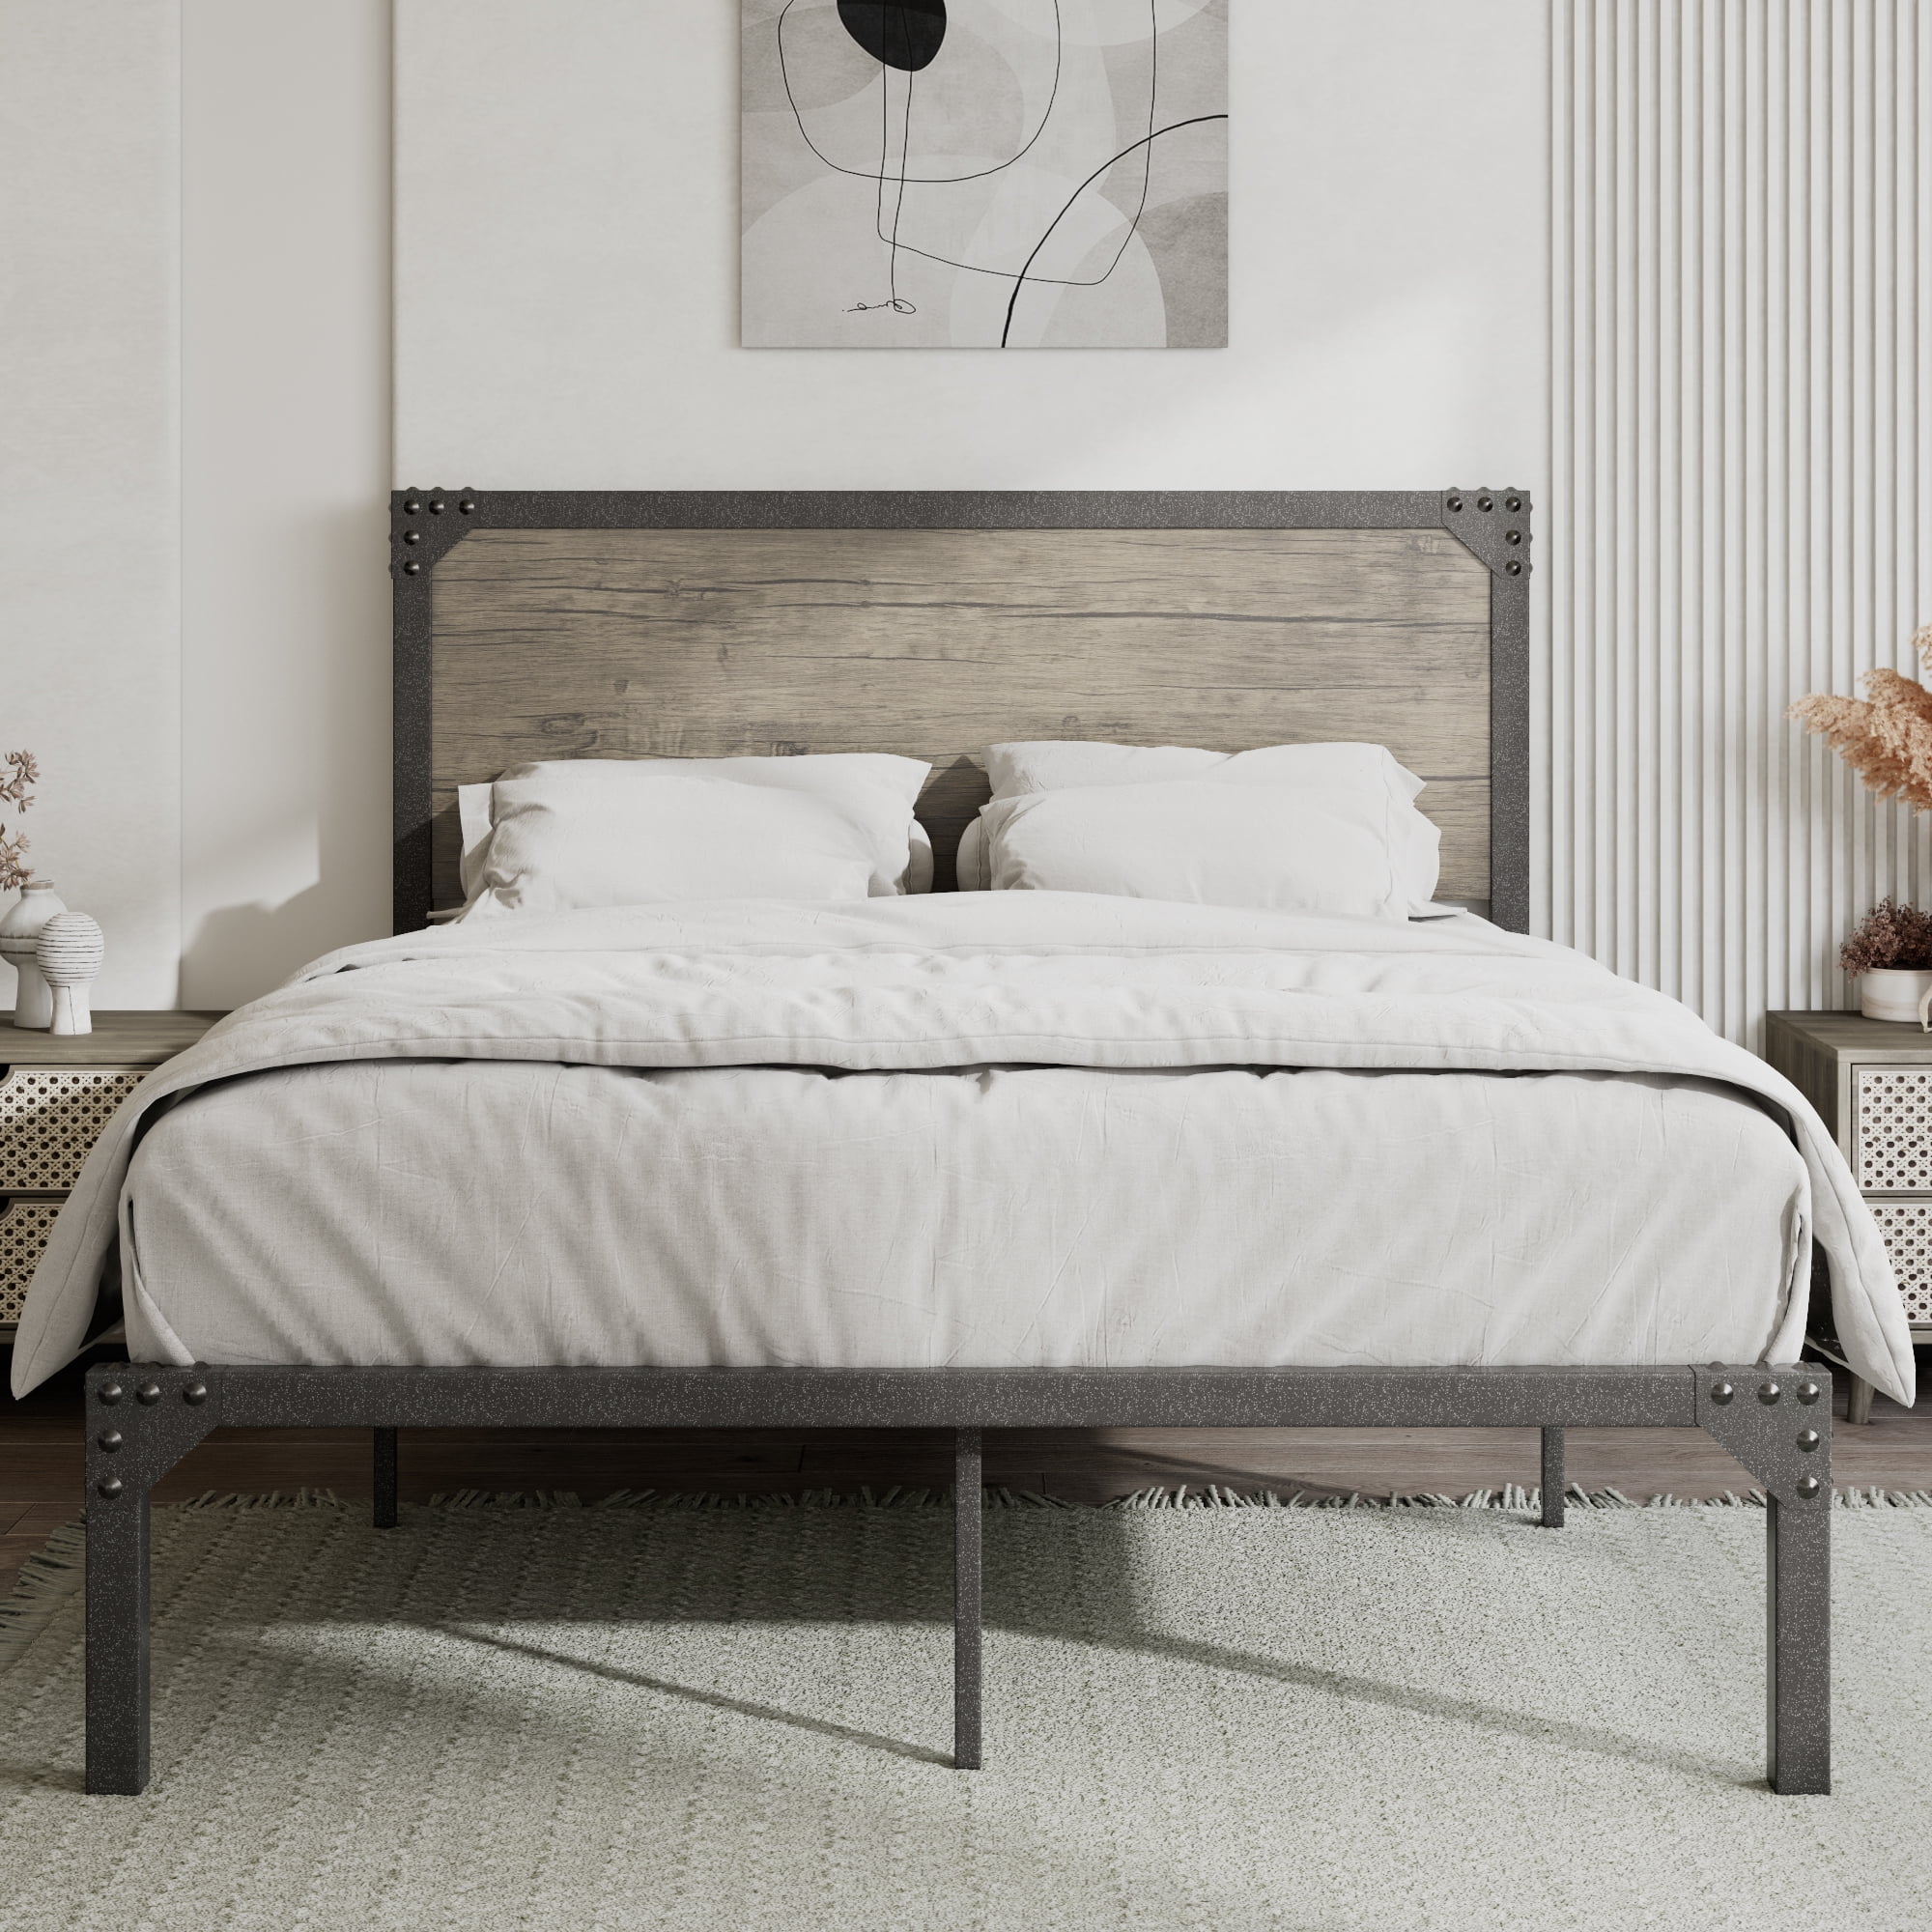 Allewie Full Size Industrial Platform Metal Bed Frame with Wooden Rivet Headboard, Brown